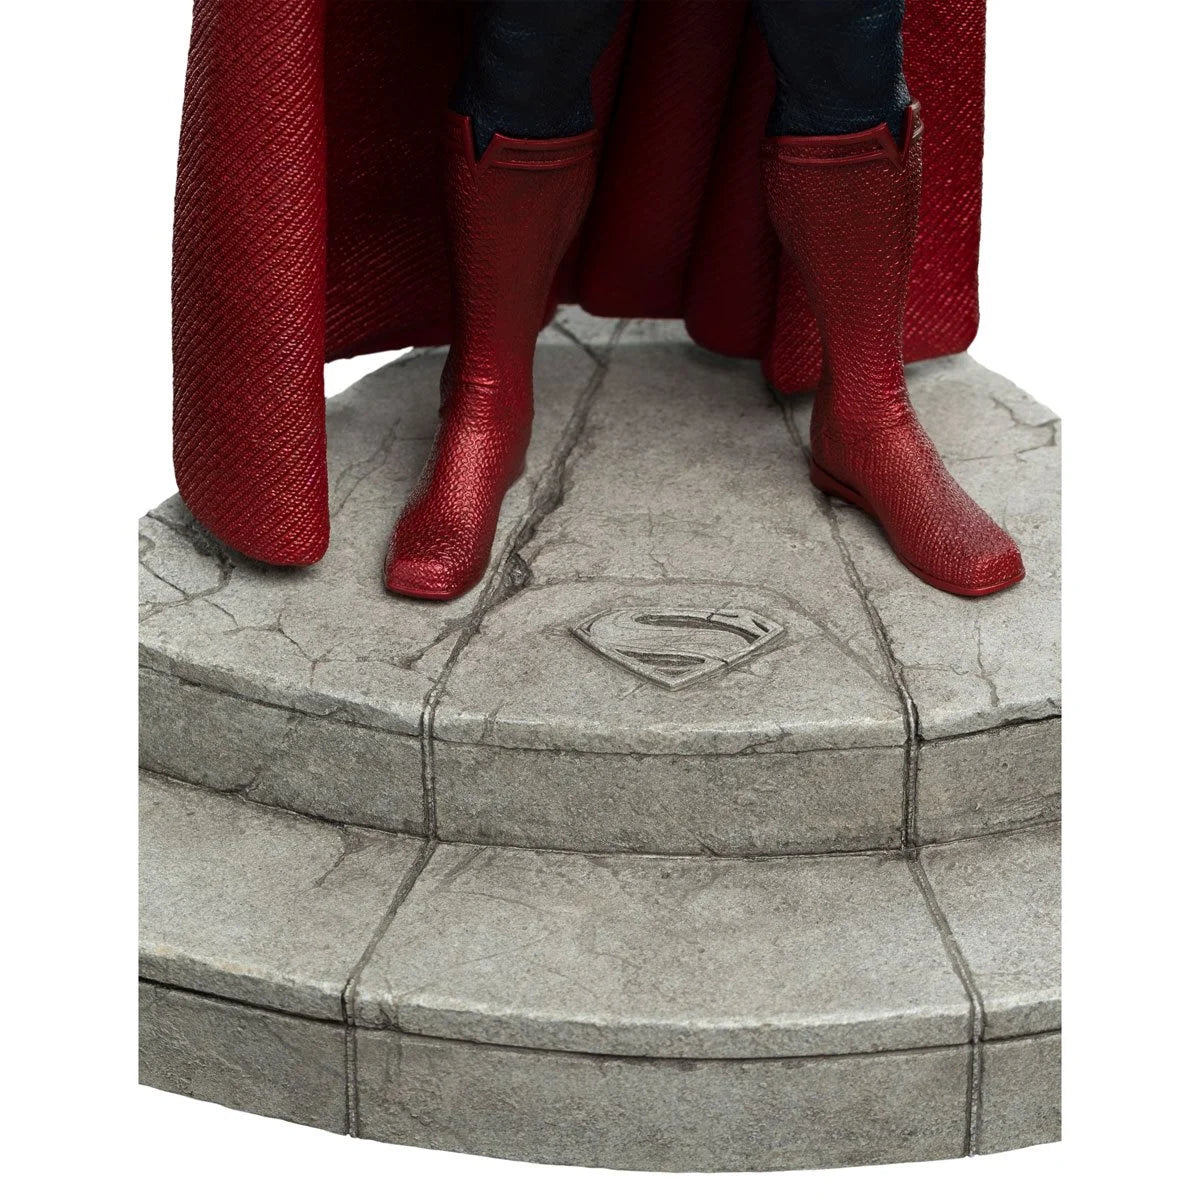 Zack Snyder's Justice League Superman Trinity Series 1:6 Scale Statue by Weta Workshop -Weta Workshop - India - www.superherotoystore.com